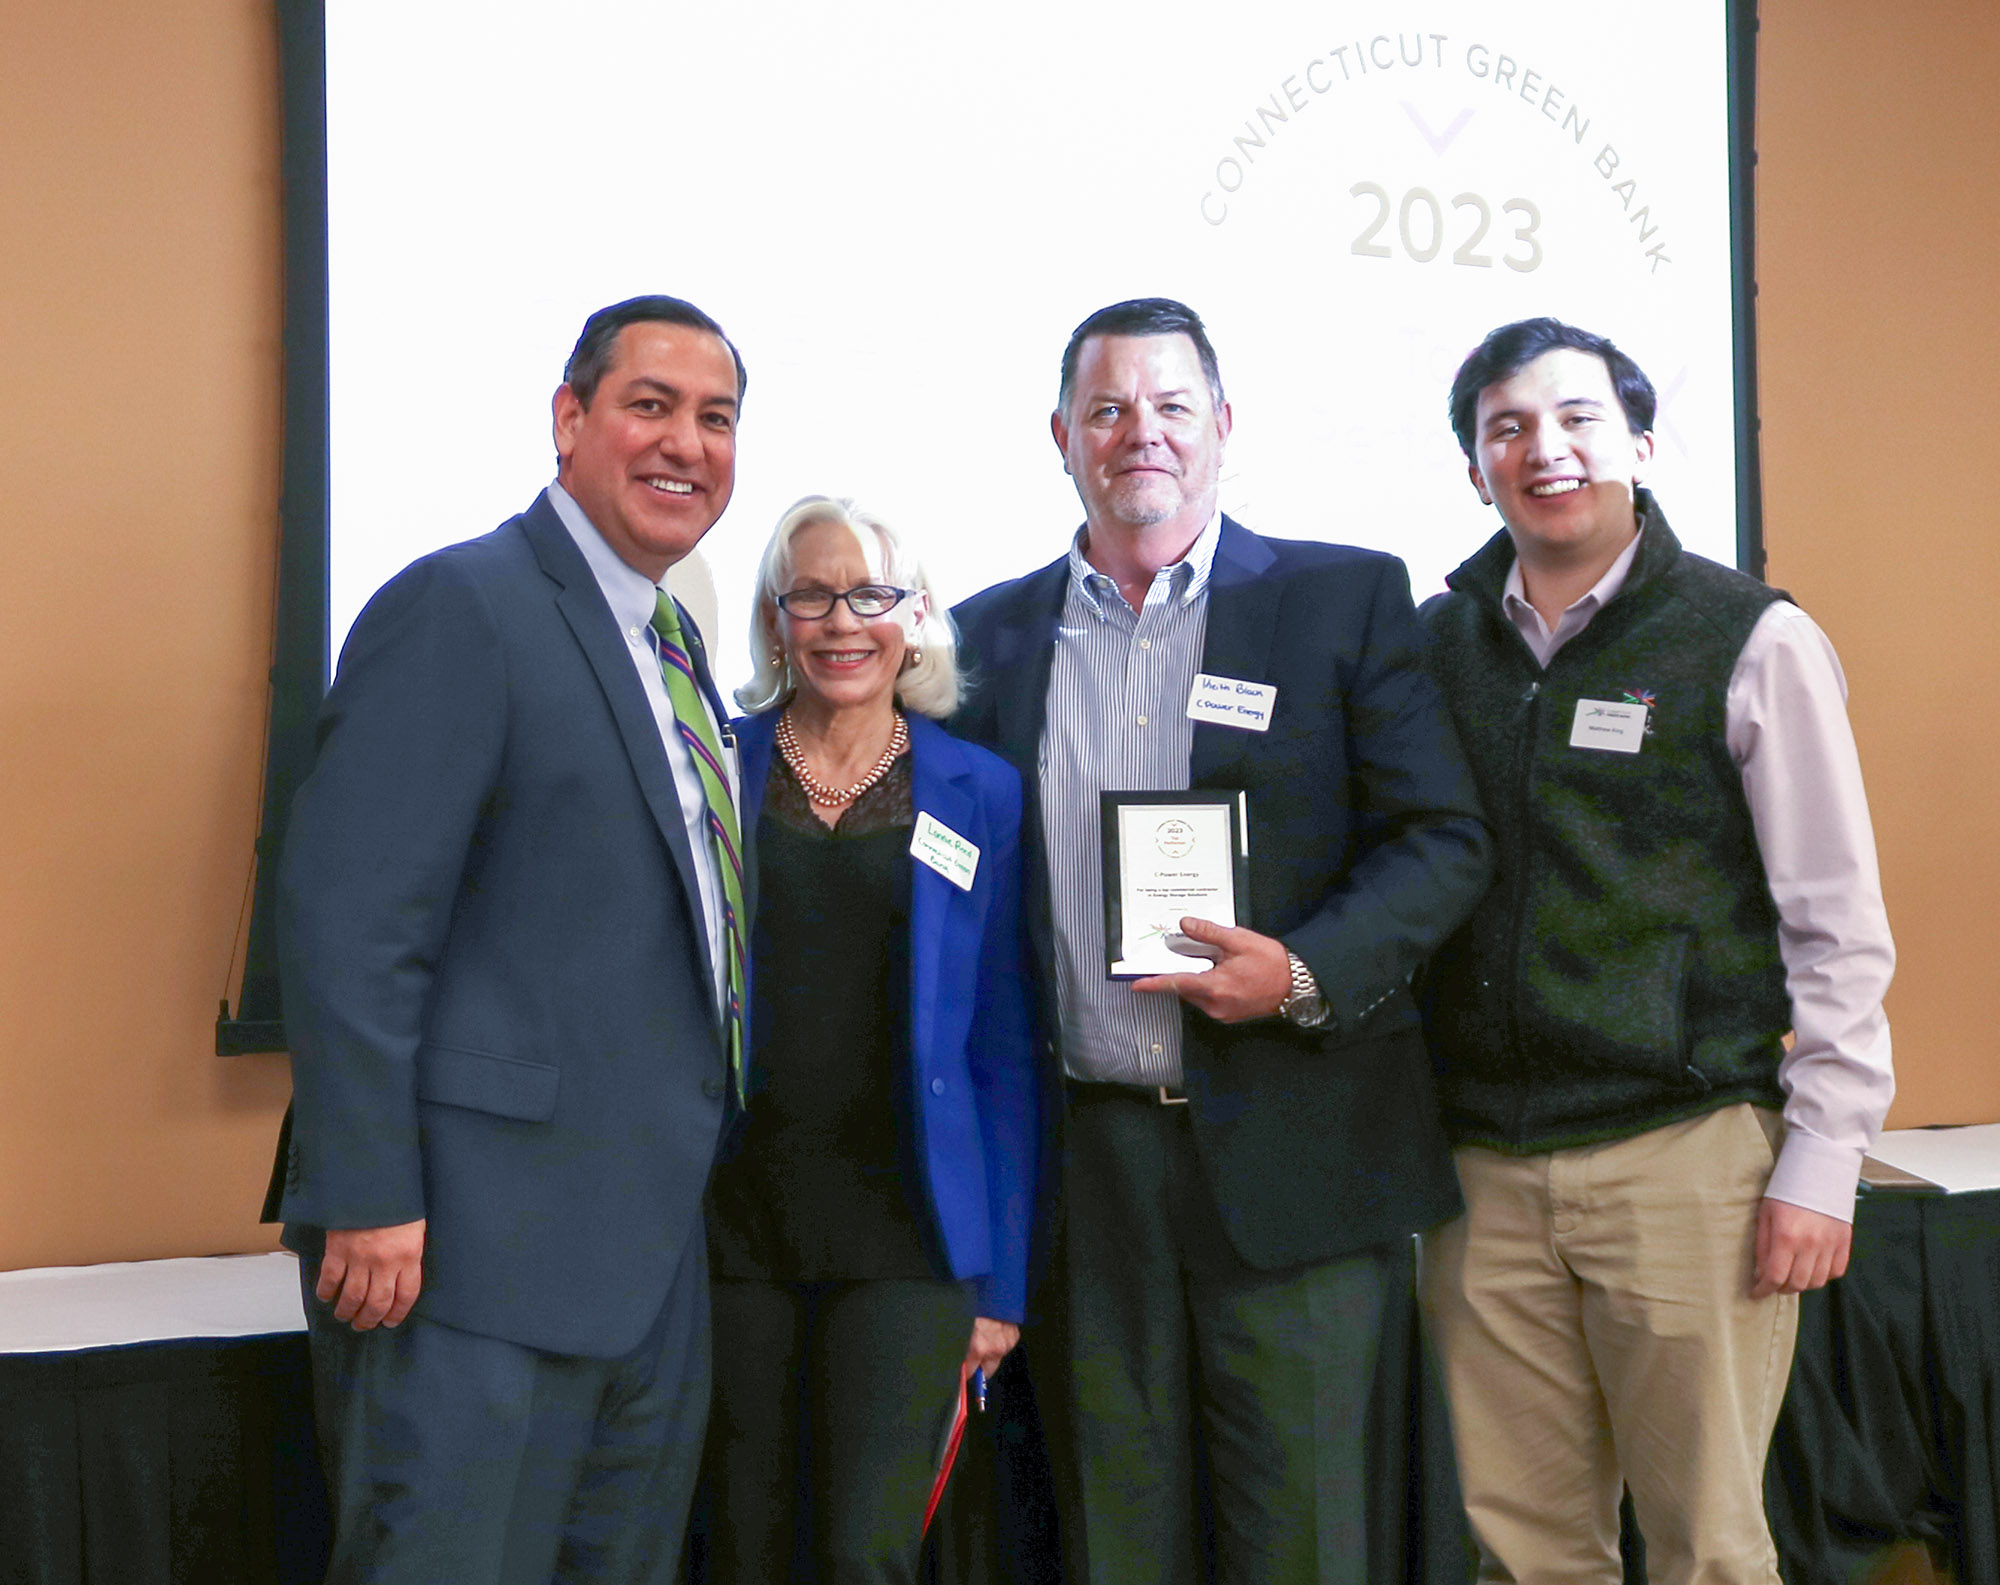 Connecticut Green Bank Award